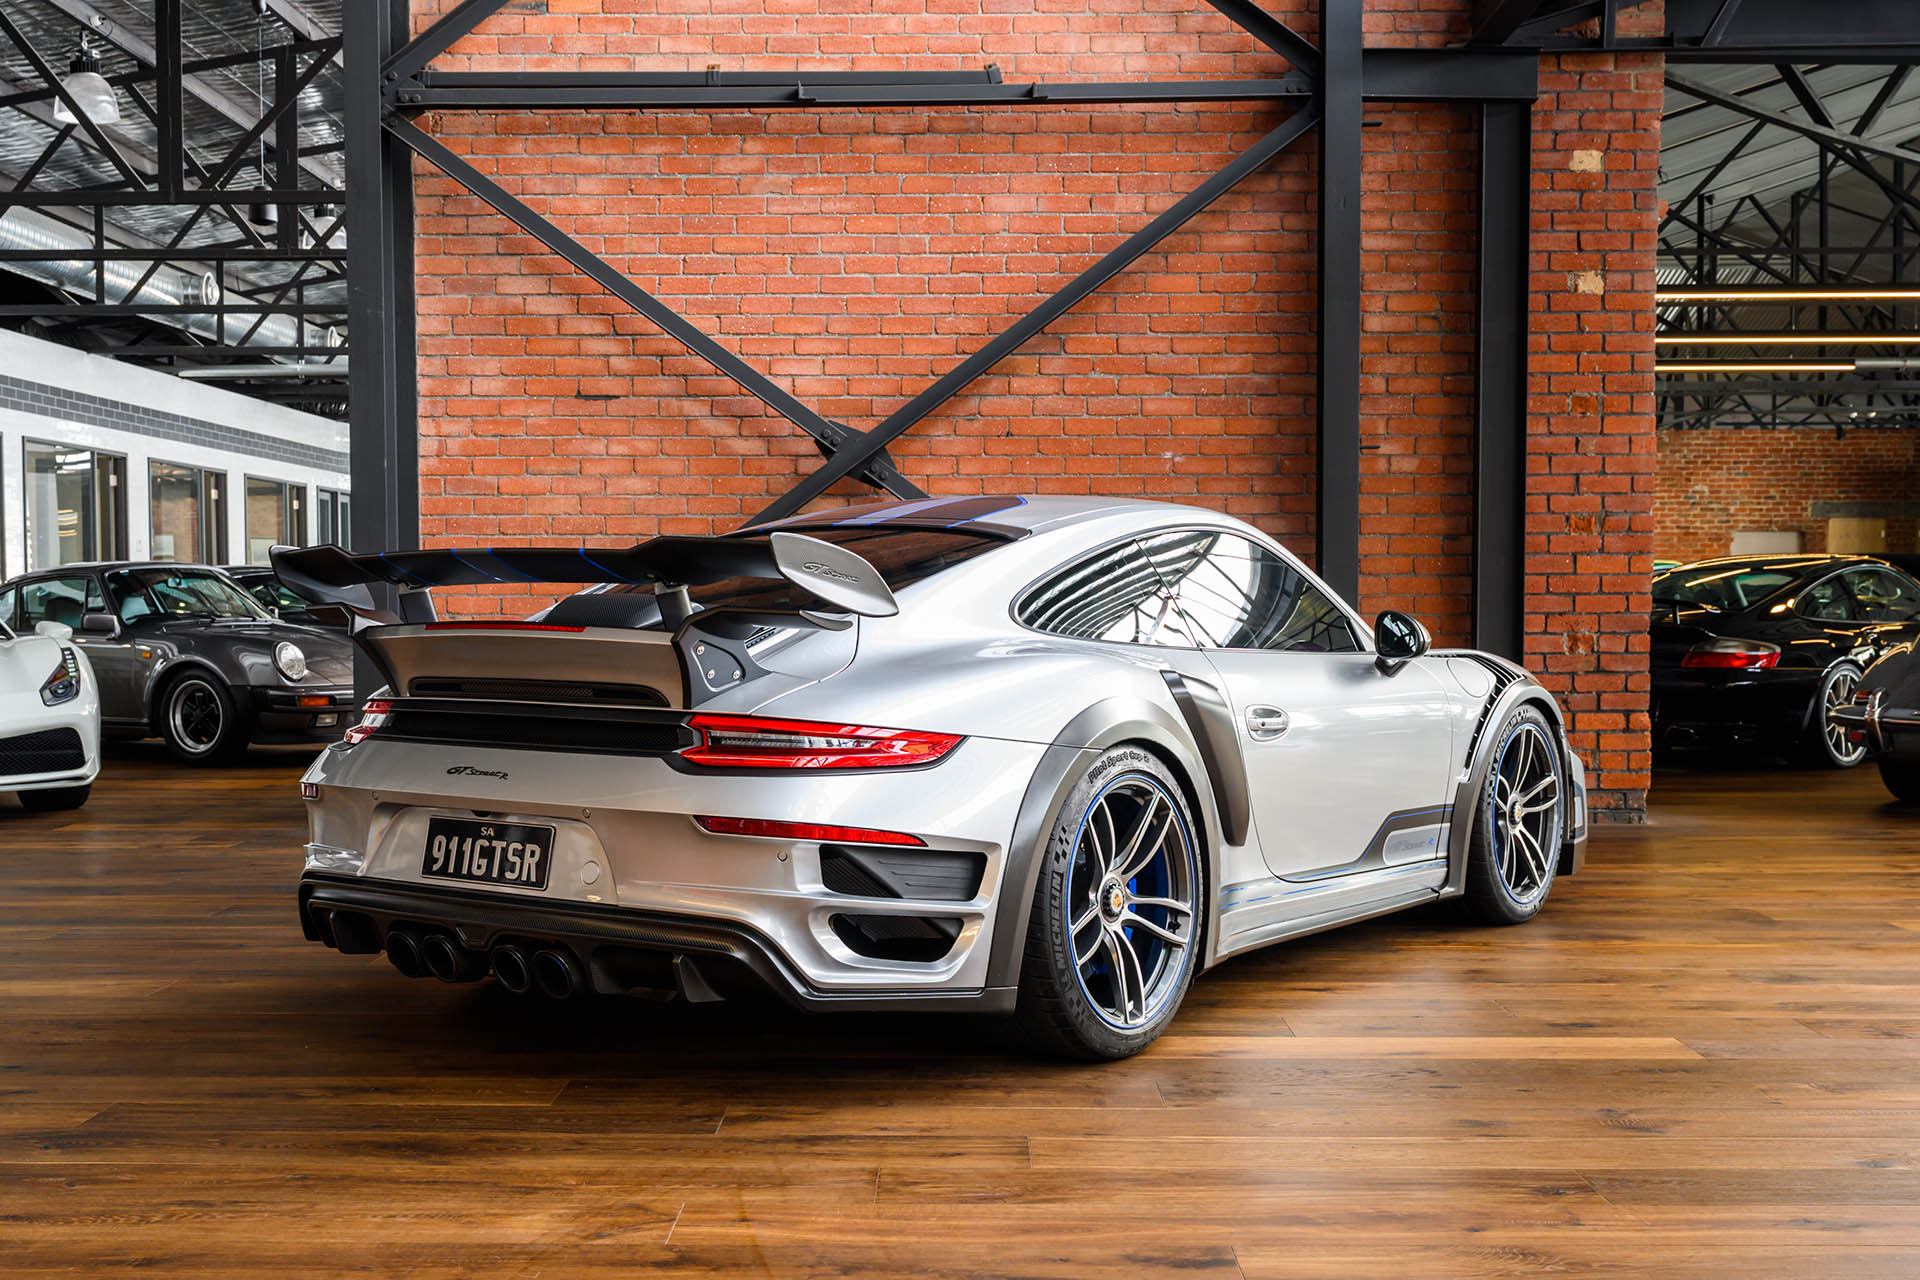 2014 TechArt Porsche 911 Turbo